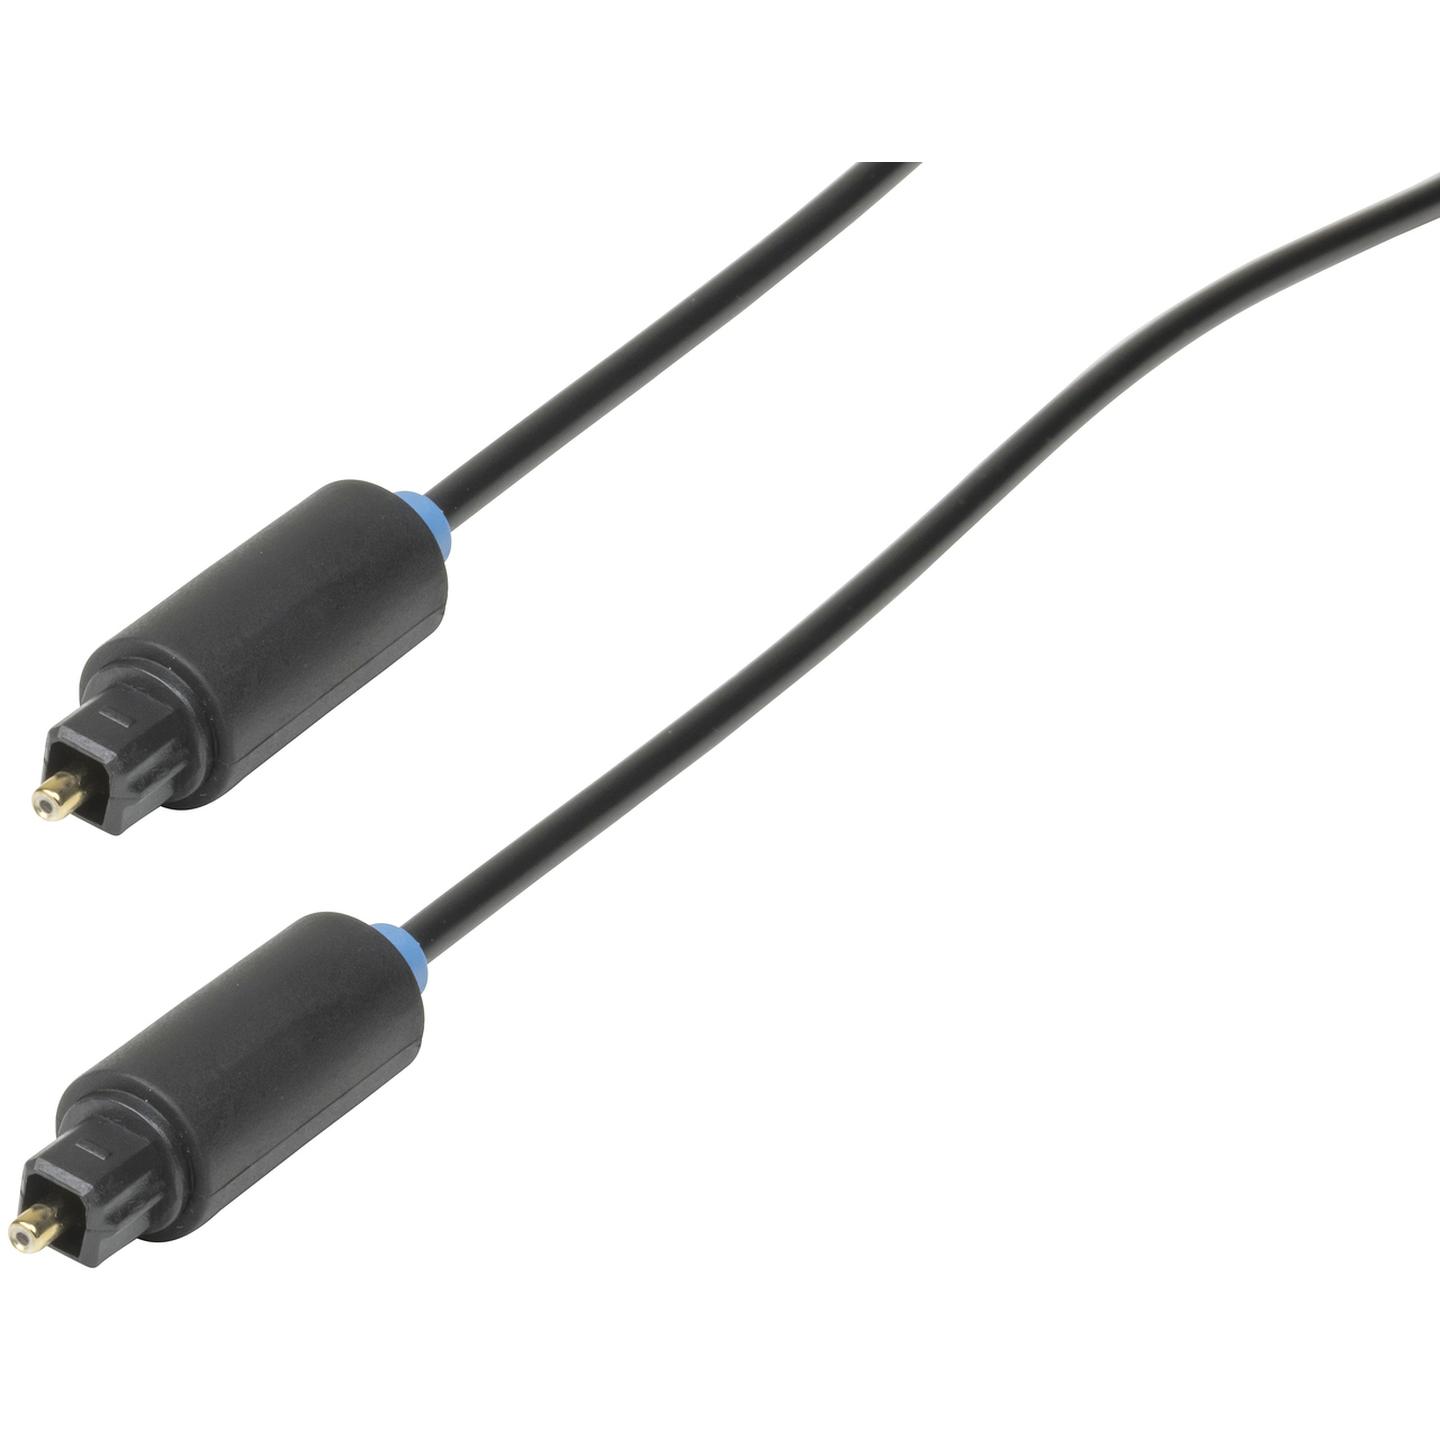 1m TOSLINK Fibre Optic Audio Cable